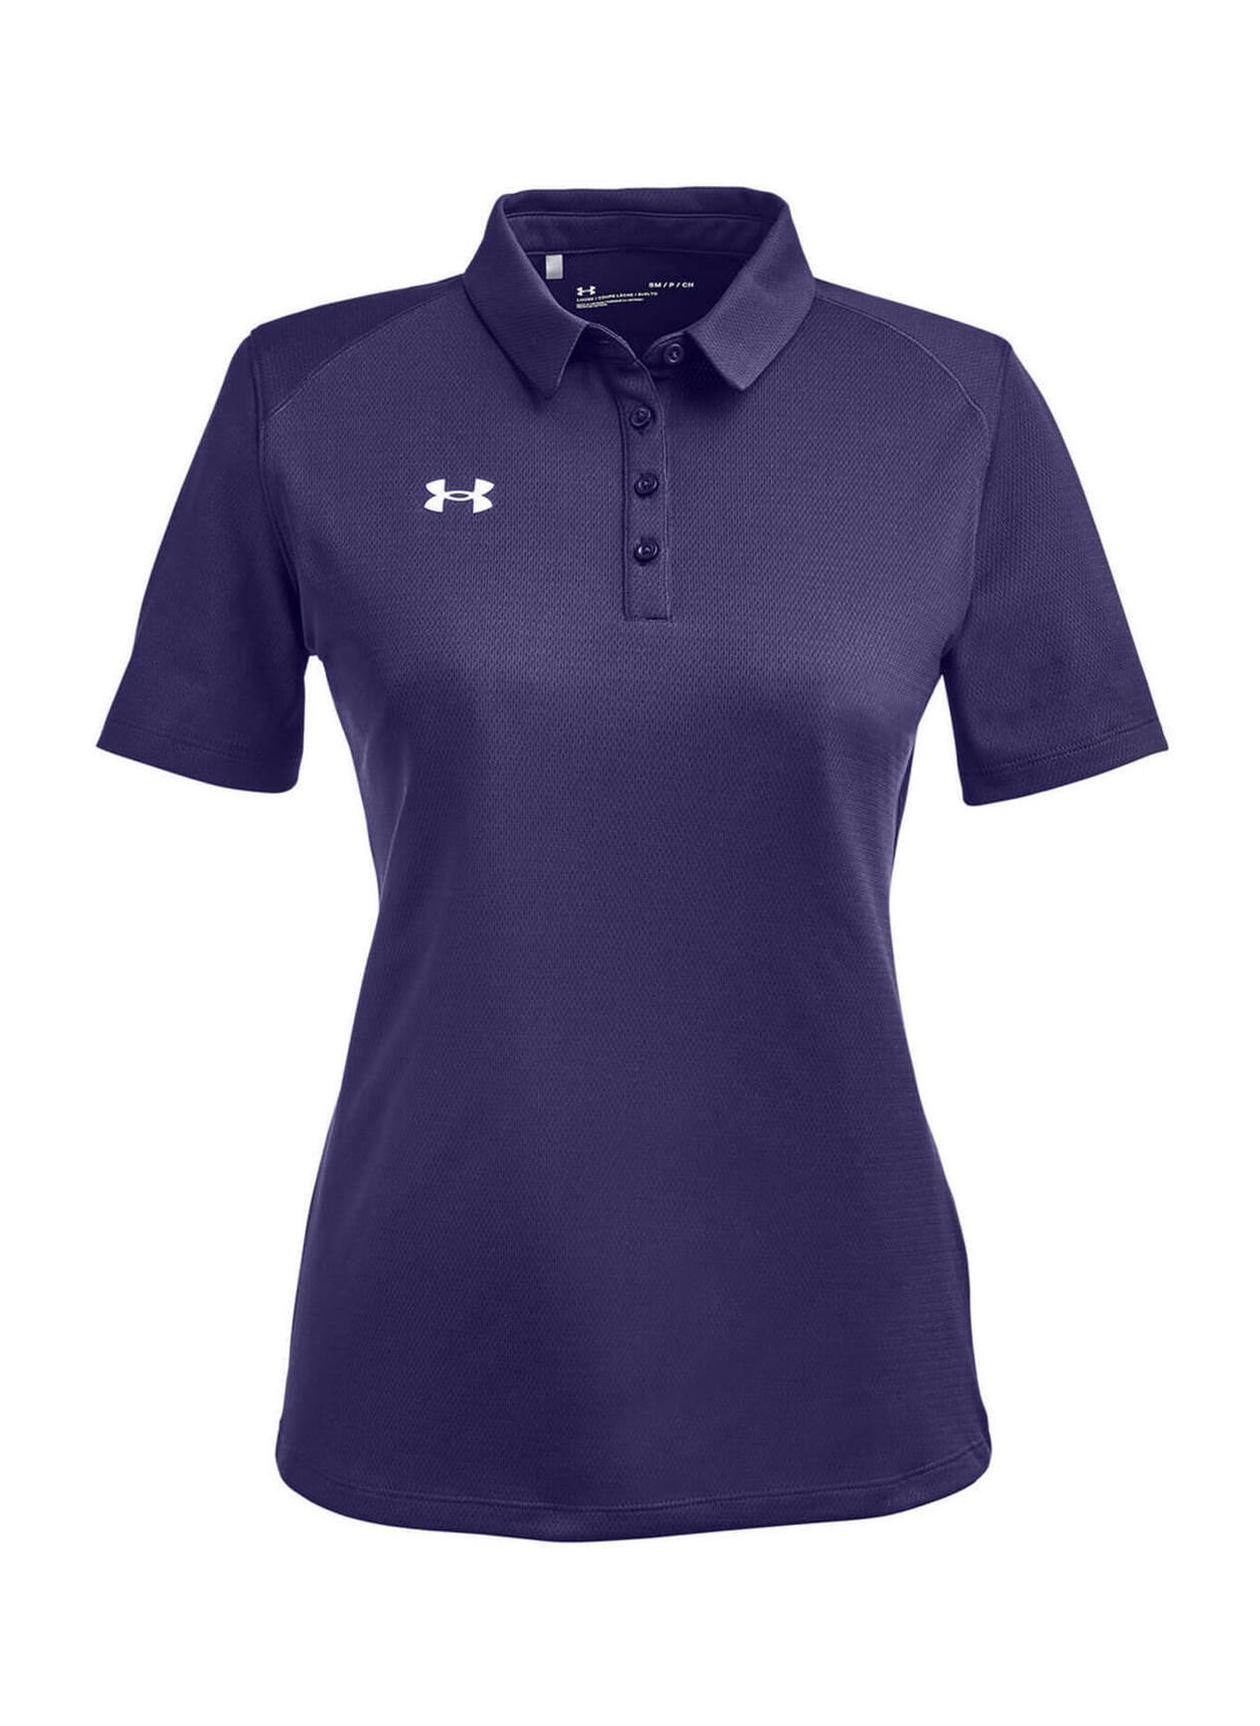 Company Polo Shirts  Under Armour Women's Purple Tech Polo